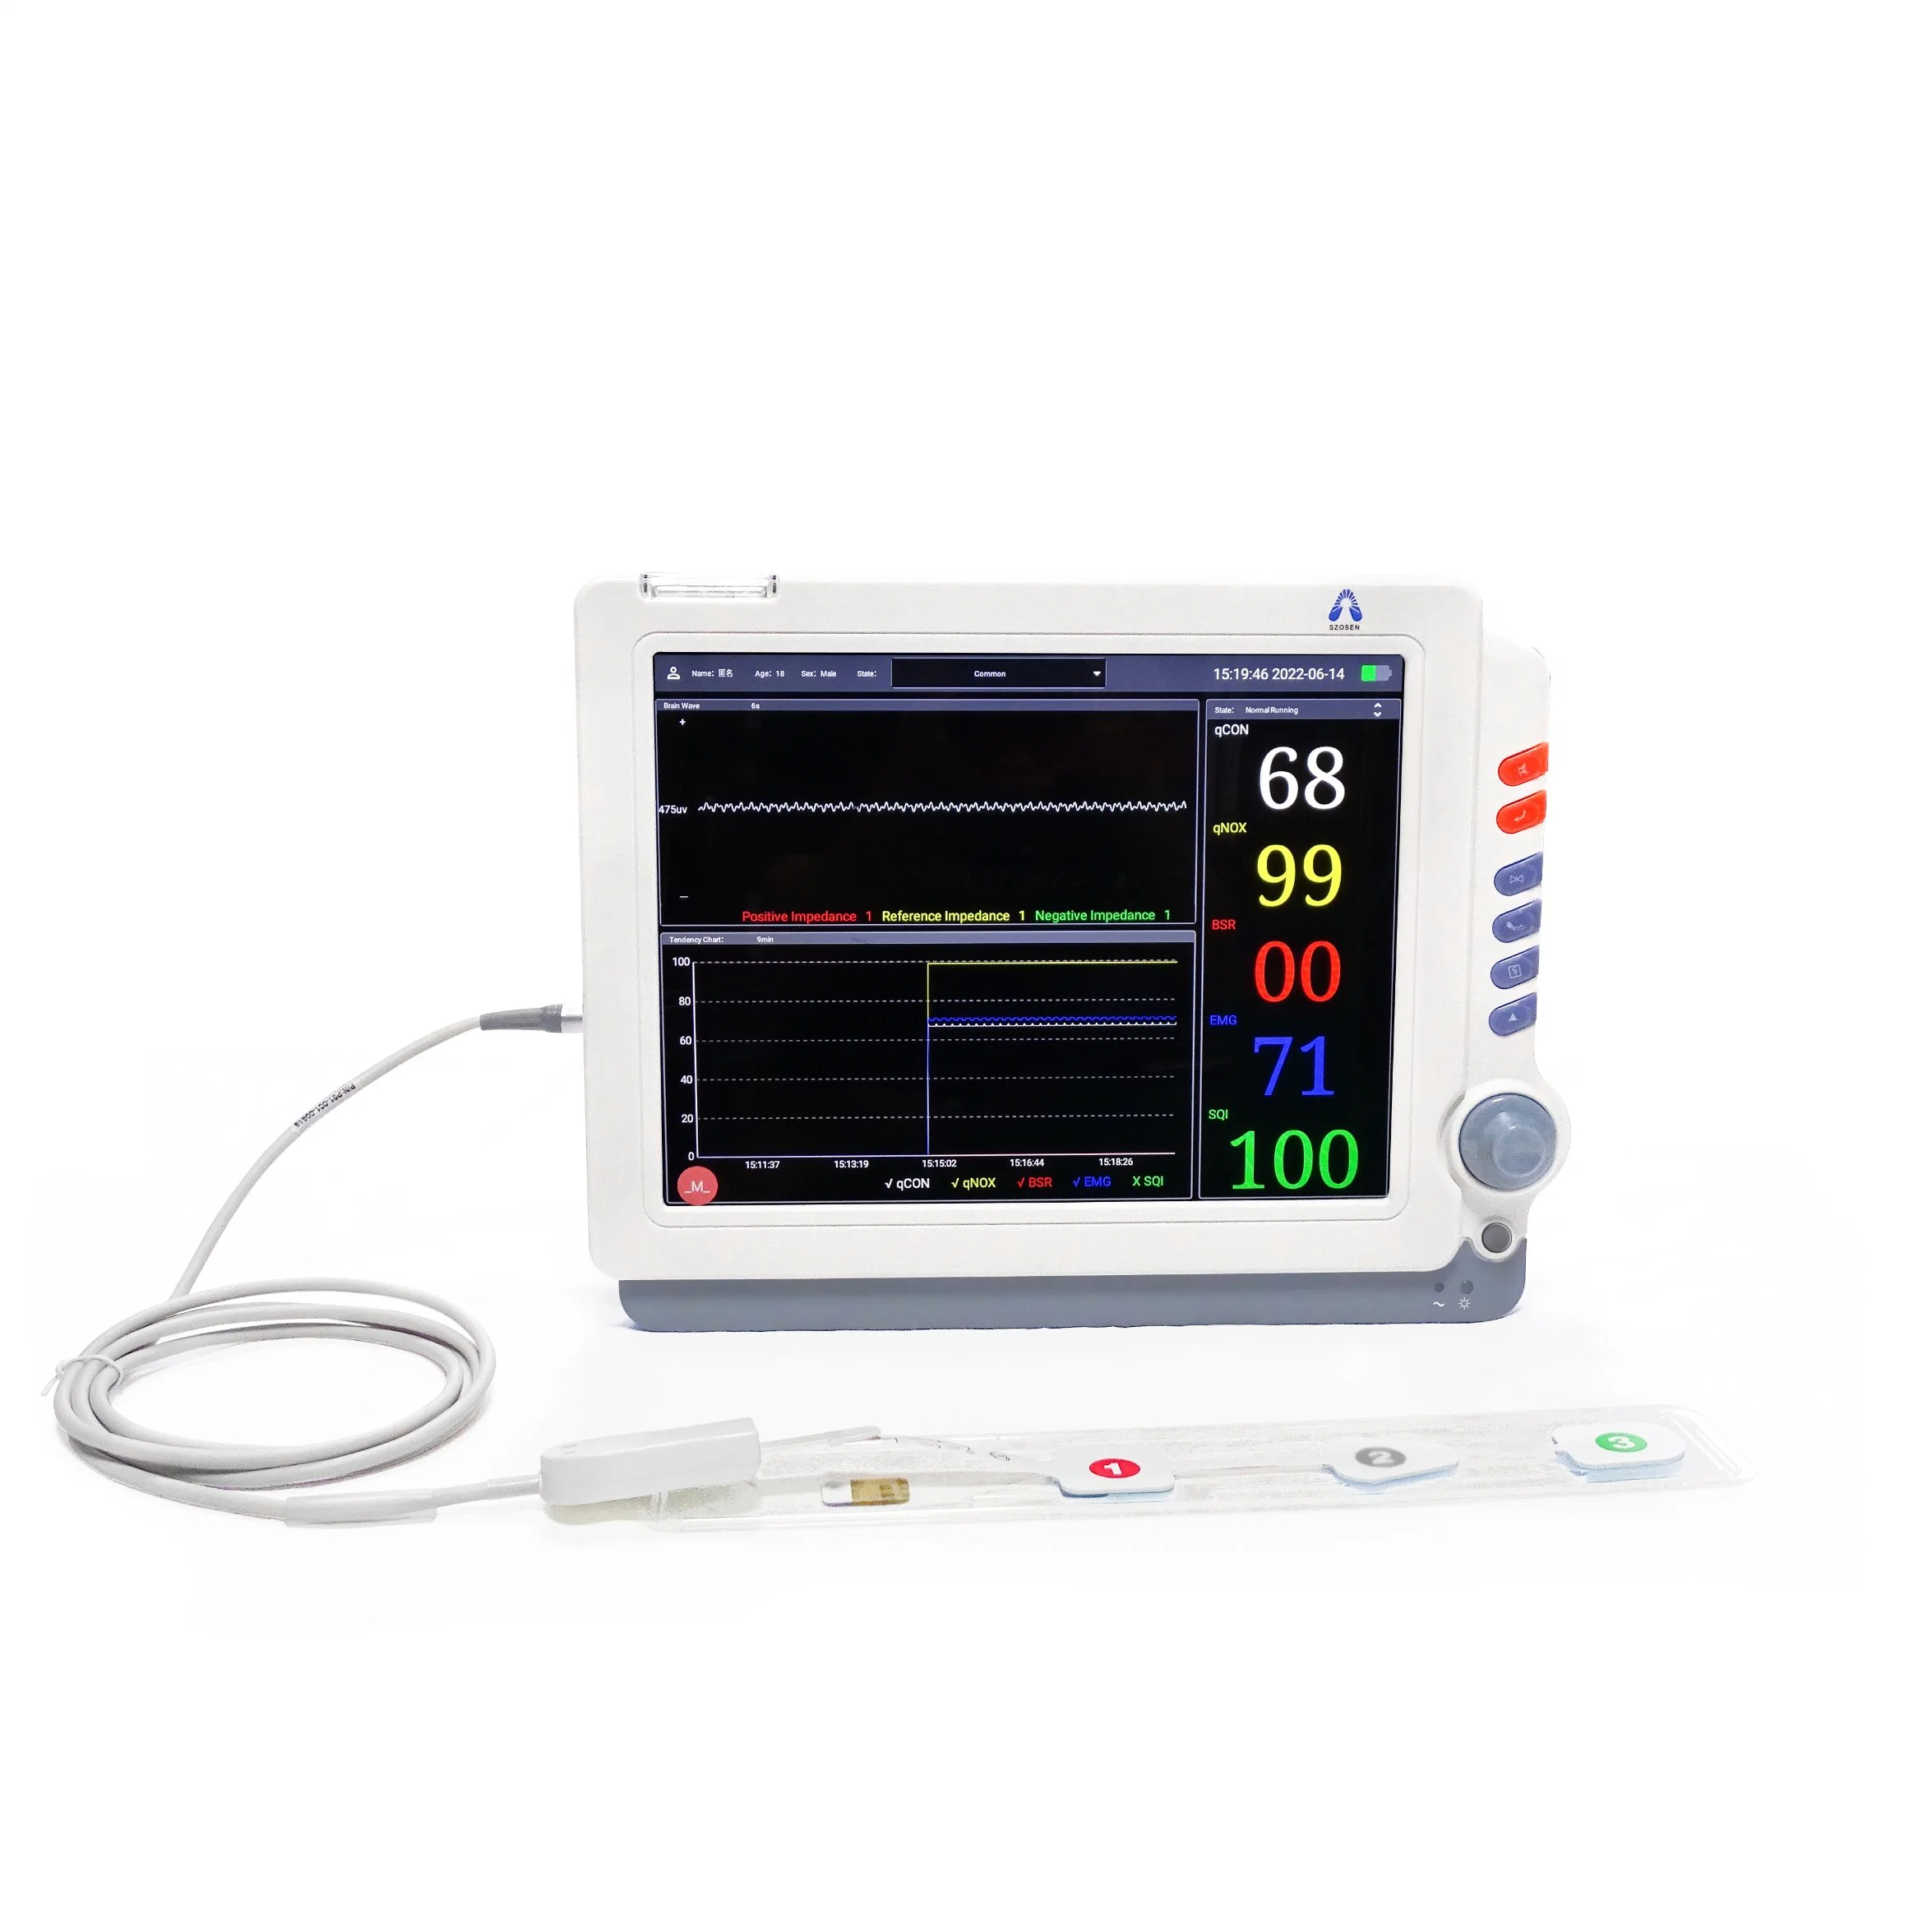 Gran pantalla de 12 pulgadas de alto brillo de pantalla táctil La pantalla LCD Monitor de la profundidad de la anestesia